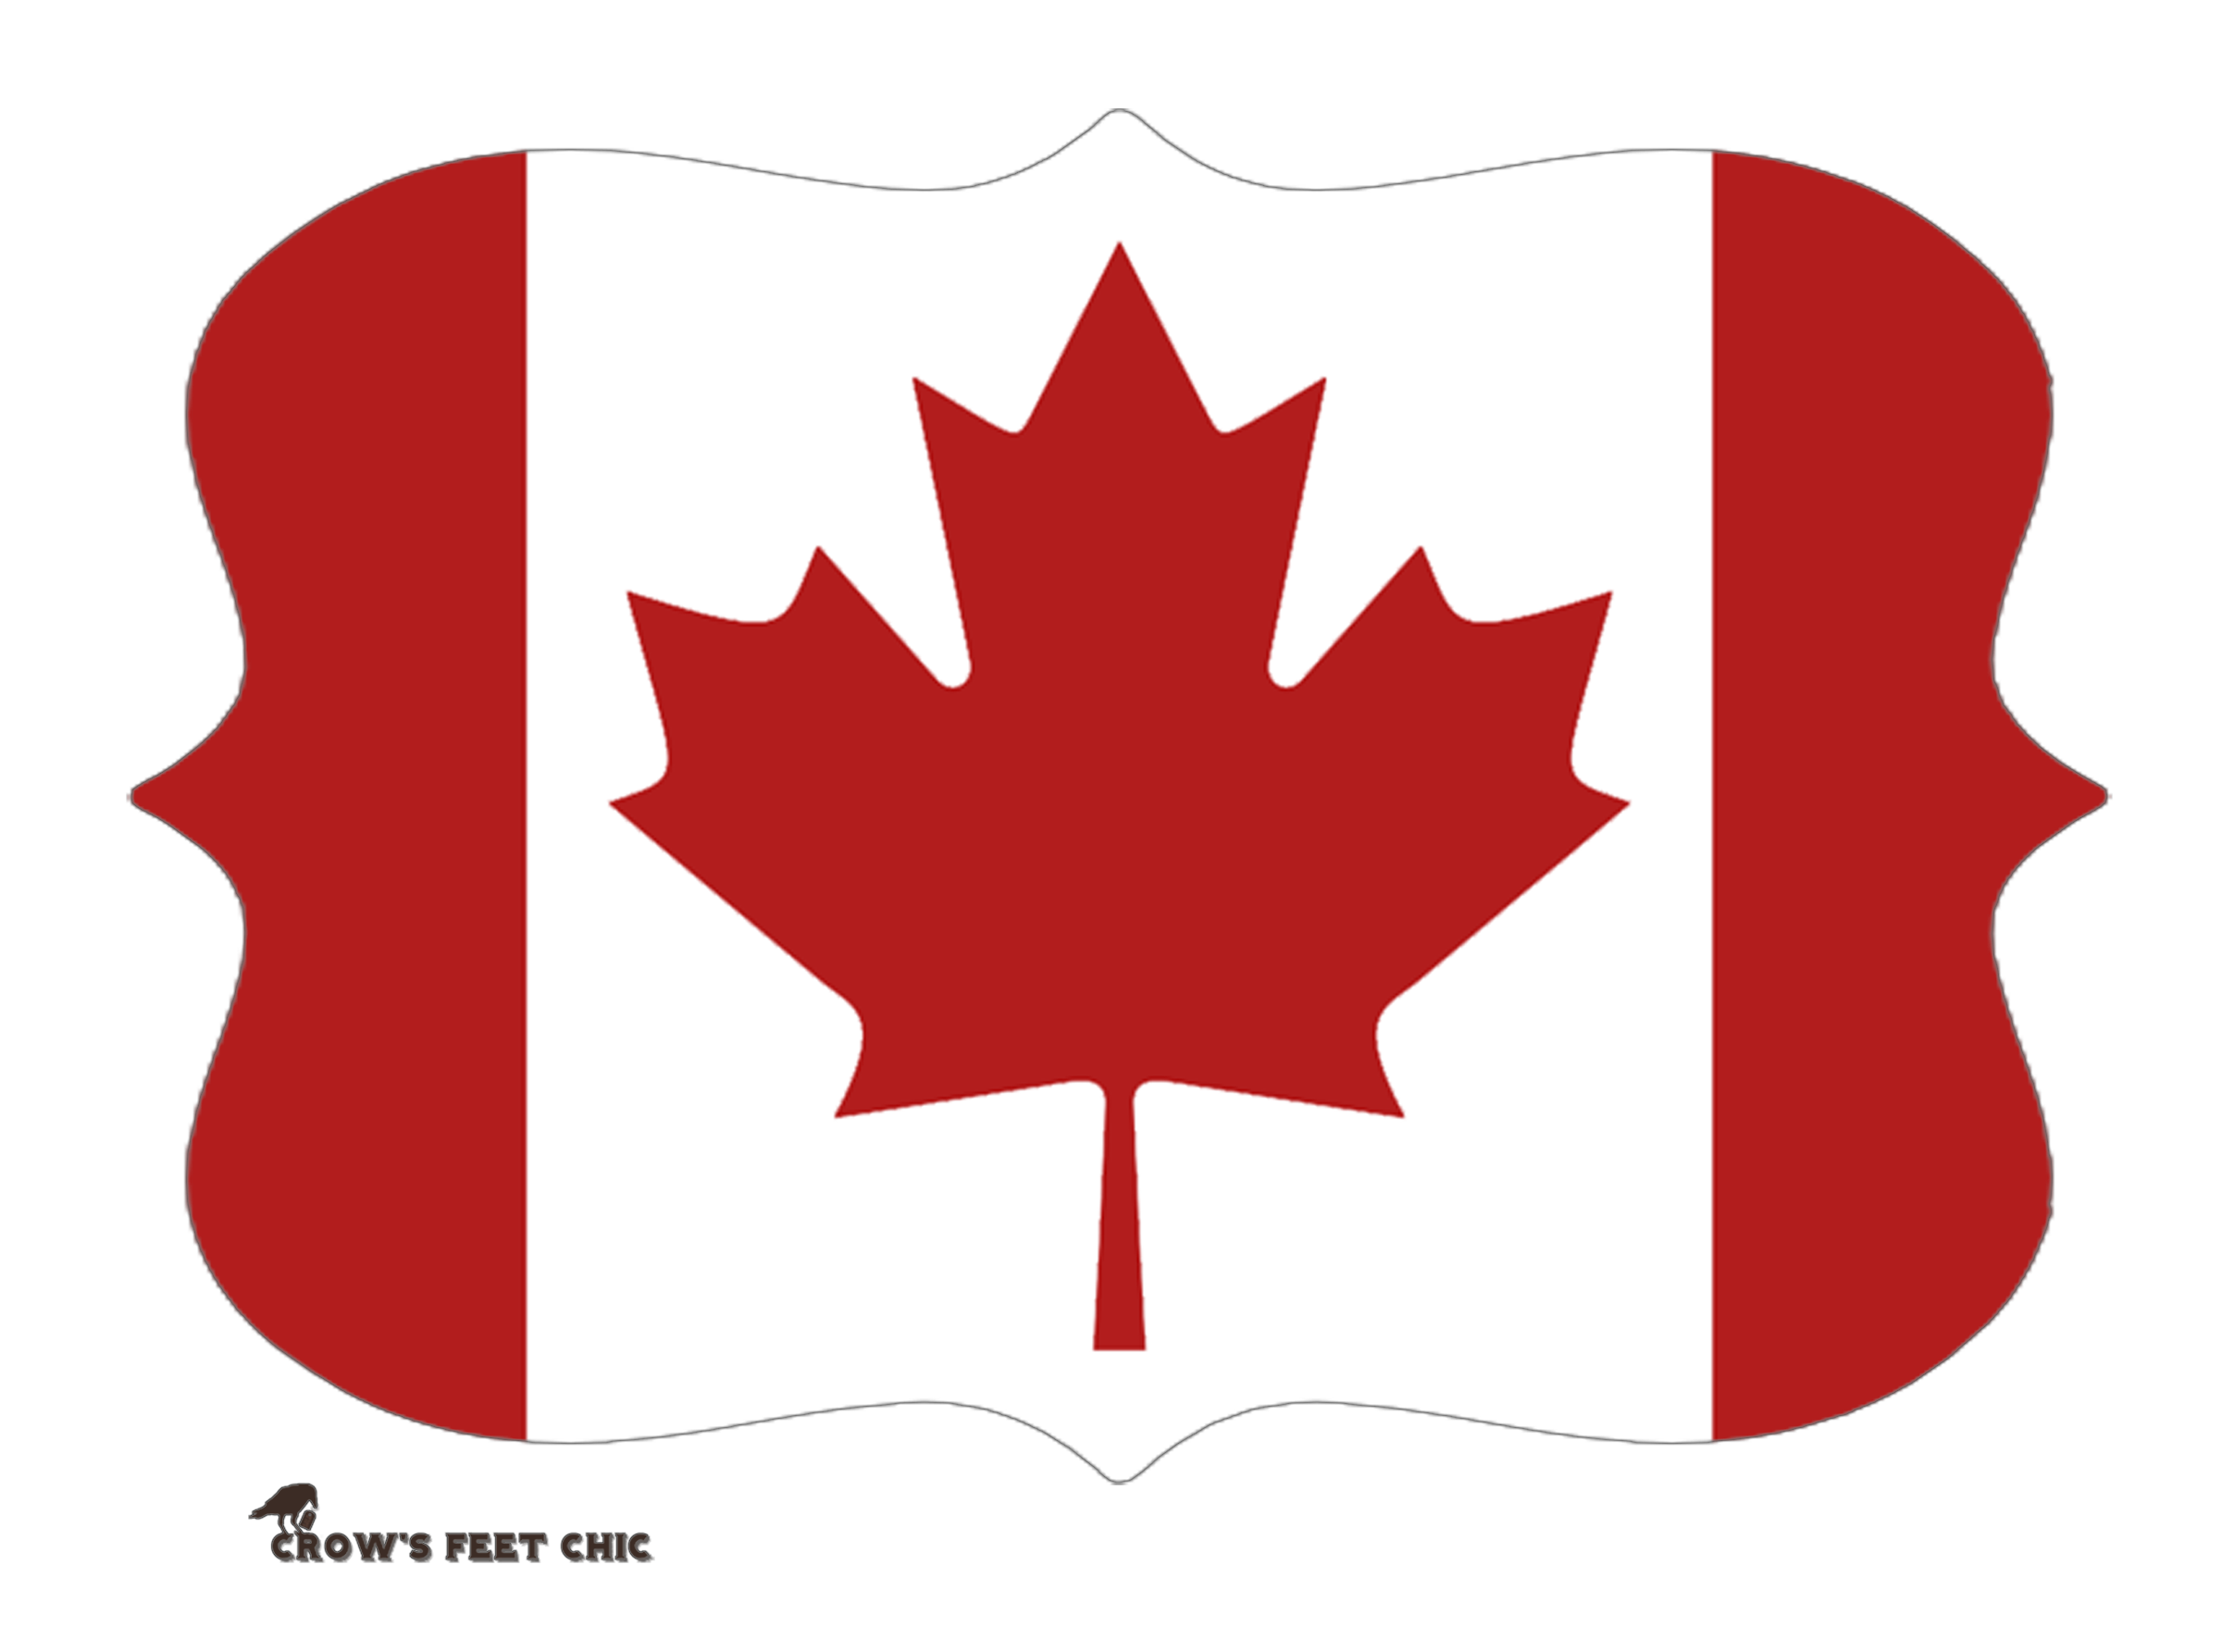 French canada. Лось символ Канады. Флаг Канада. Канада рисунок. Флаг французской Канады.